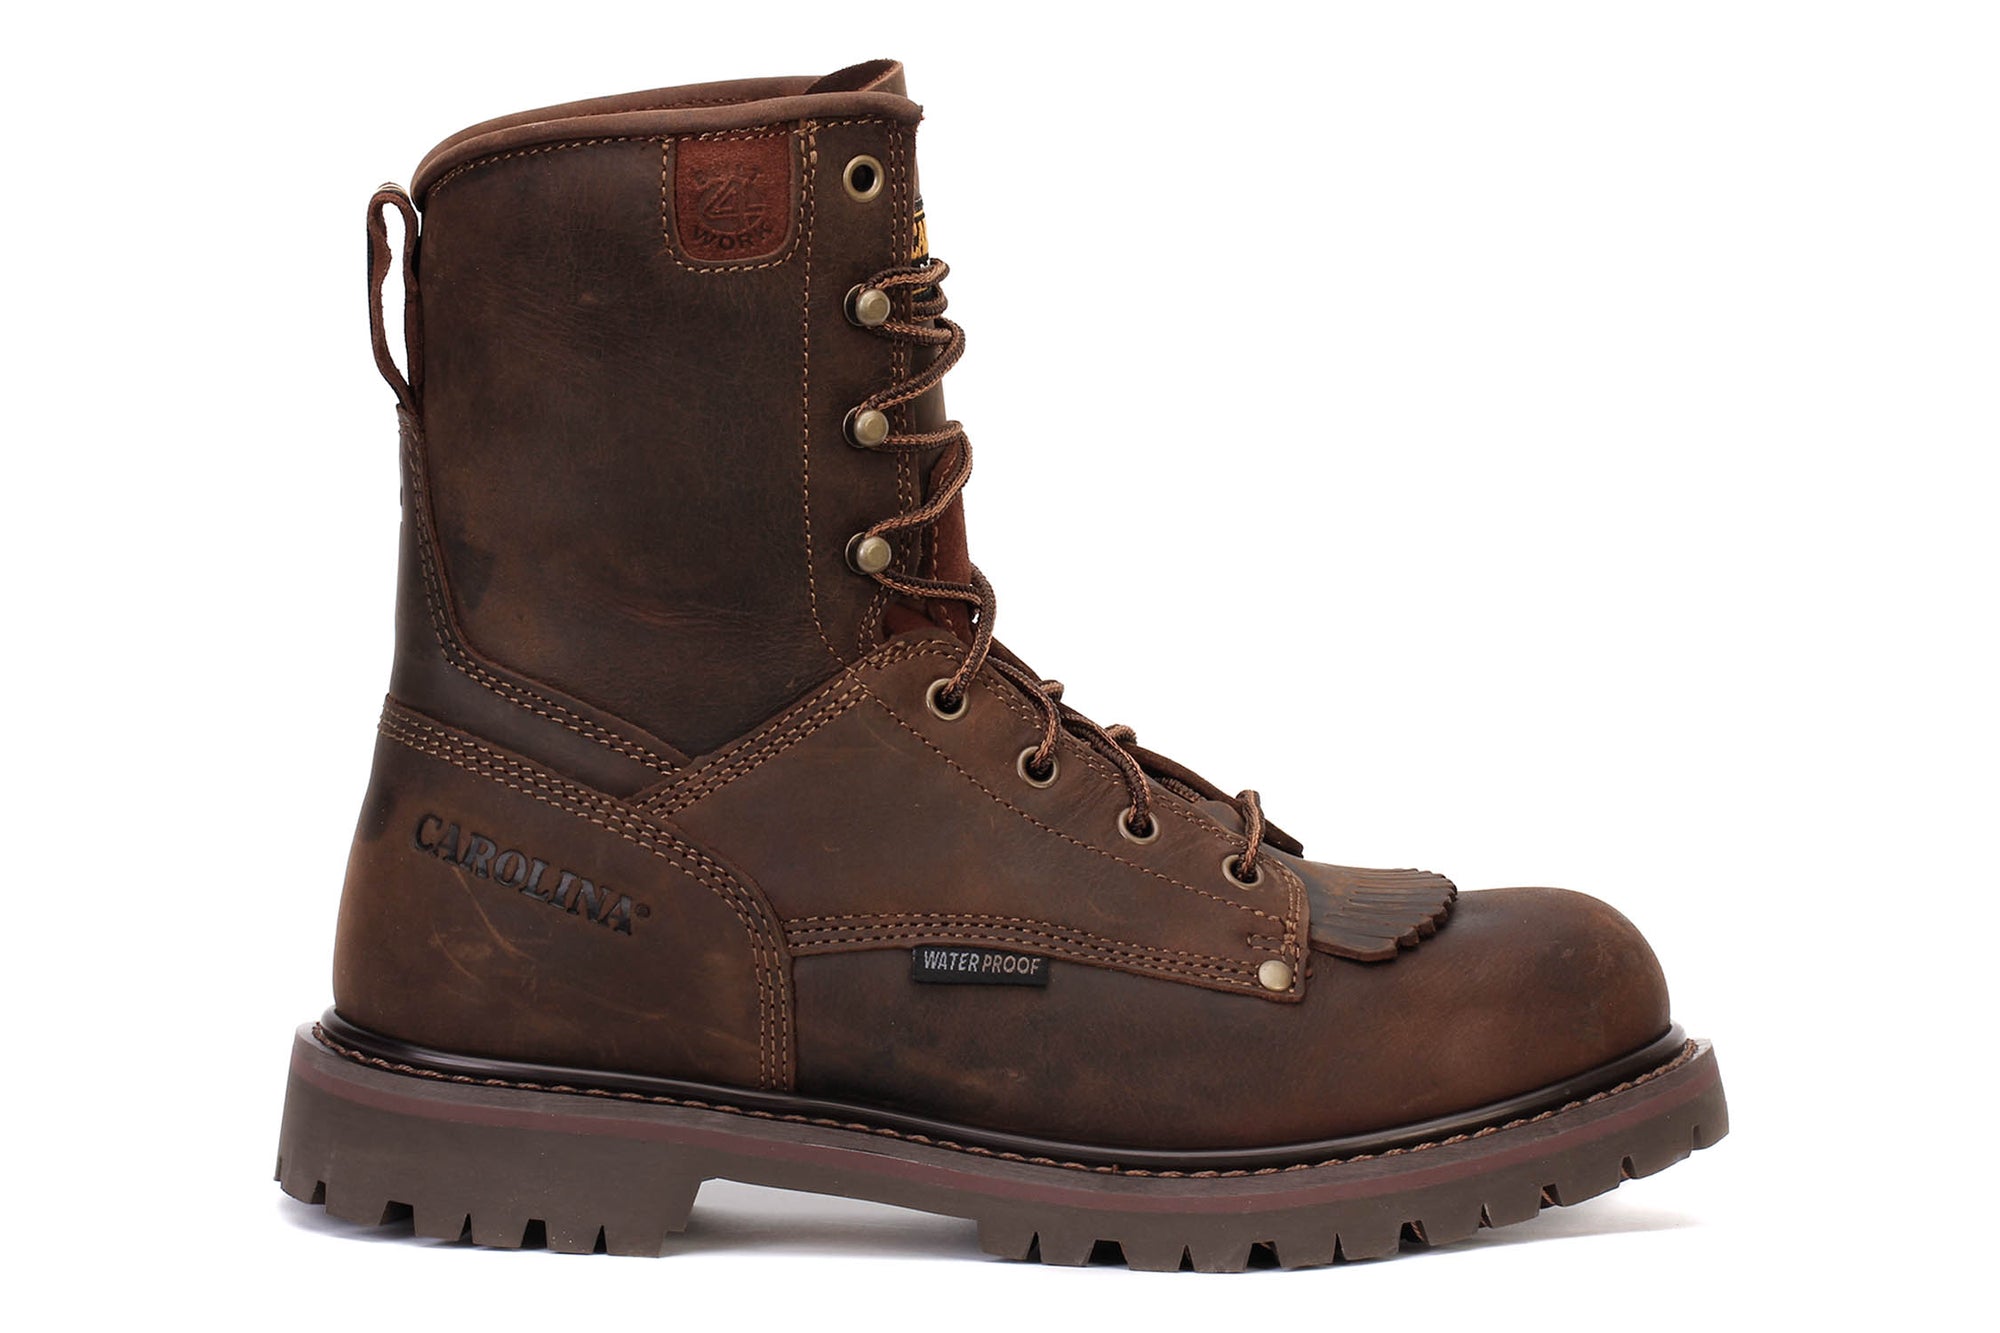 Men's 8" Waterproof Soft Toe Work Boots CA8028